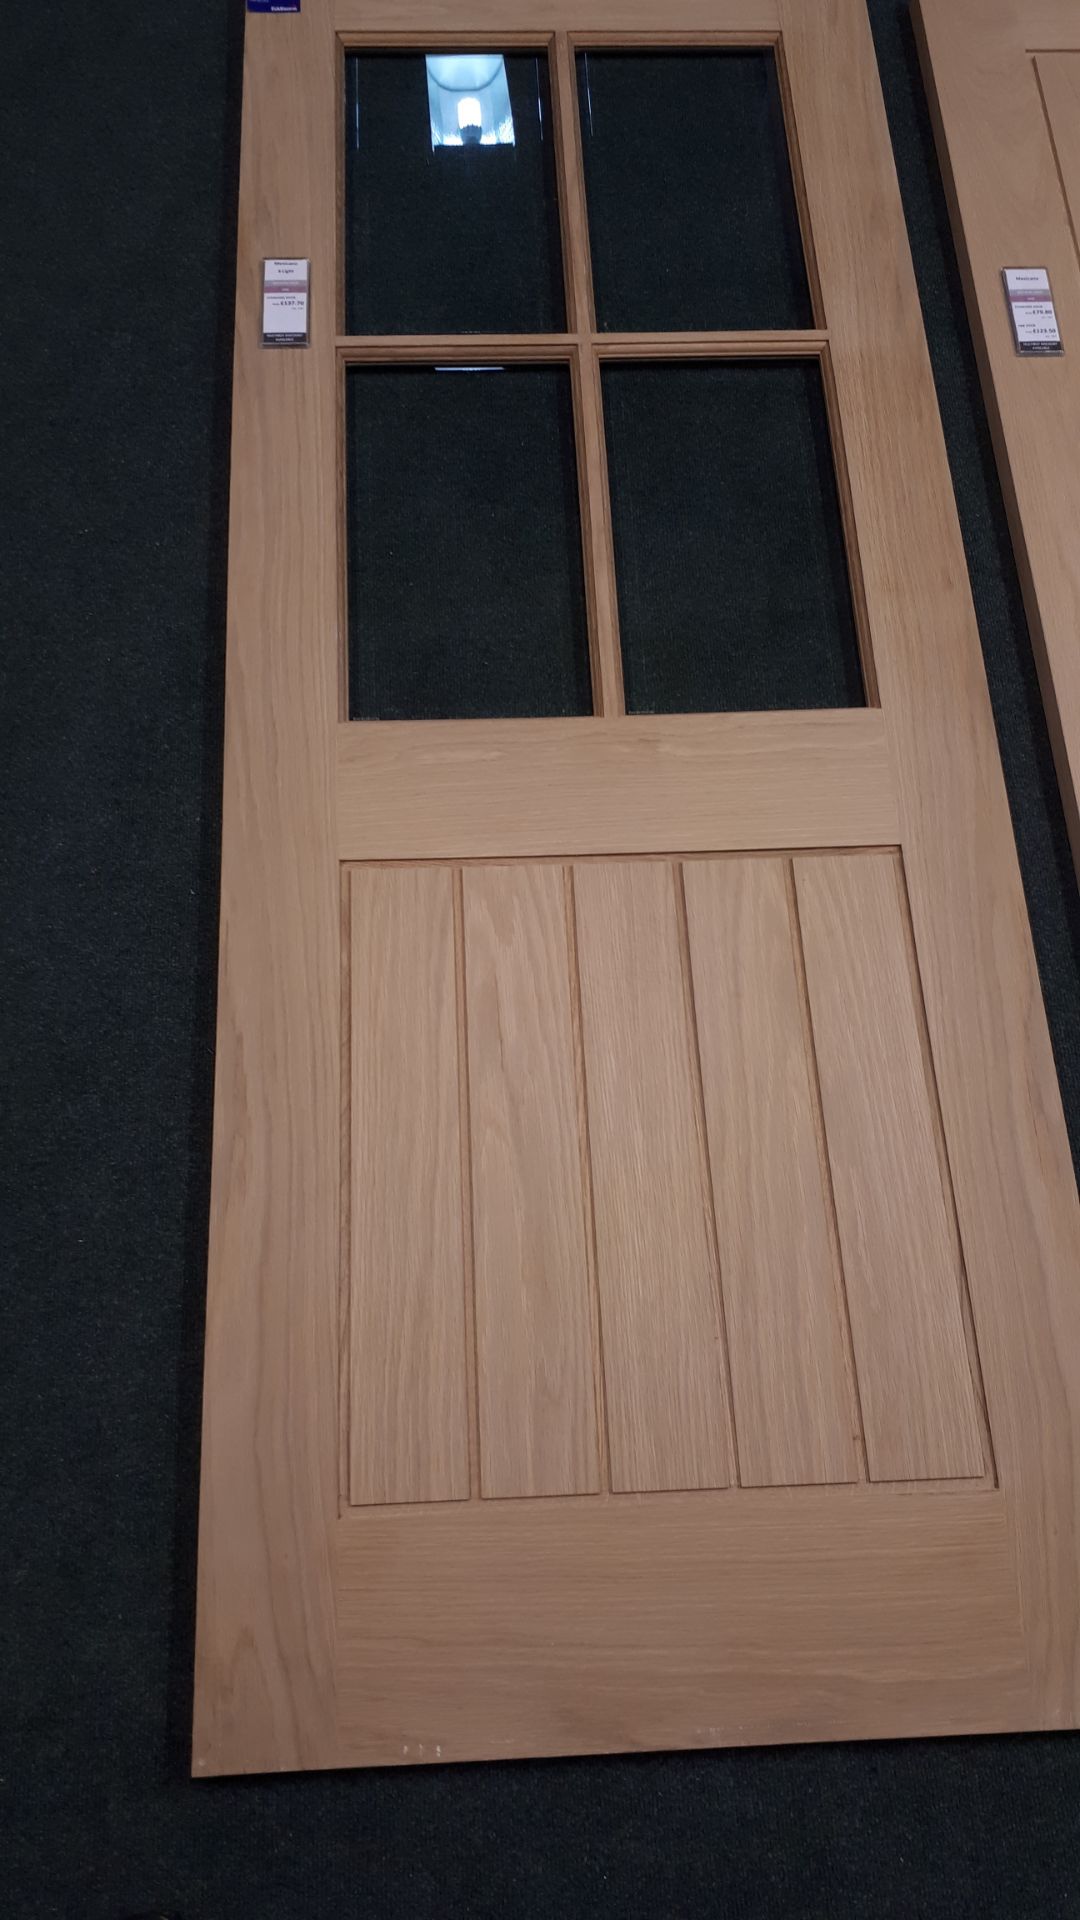 6 x Mexicano White Oak 4L Beveled Glazed Internal Door AWOMEX4LBEV27 78”x27”x35mm Internal Door - - Image 3 of 3